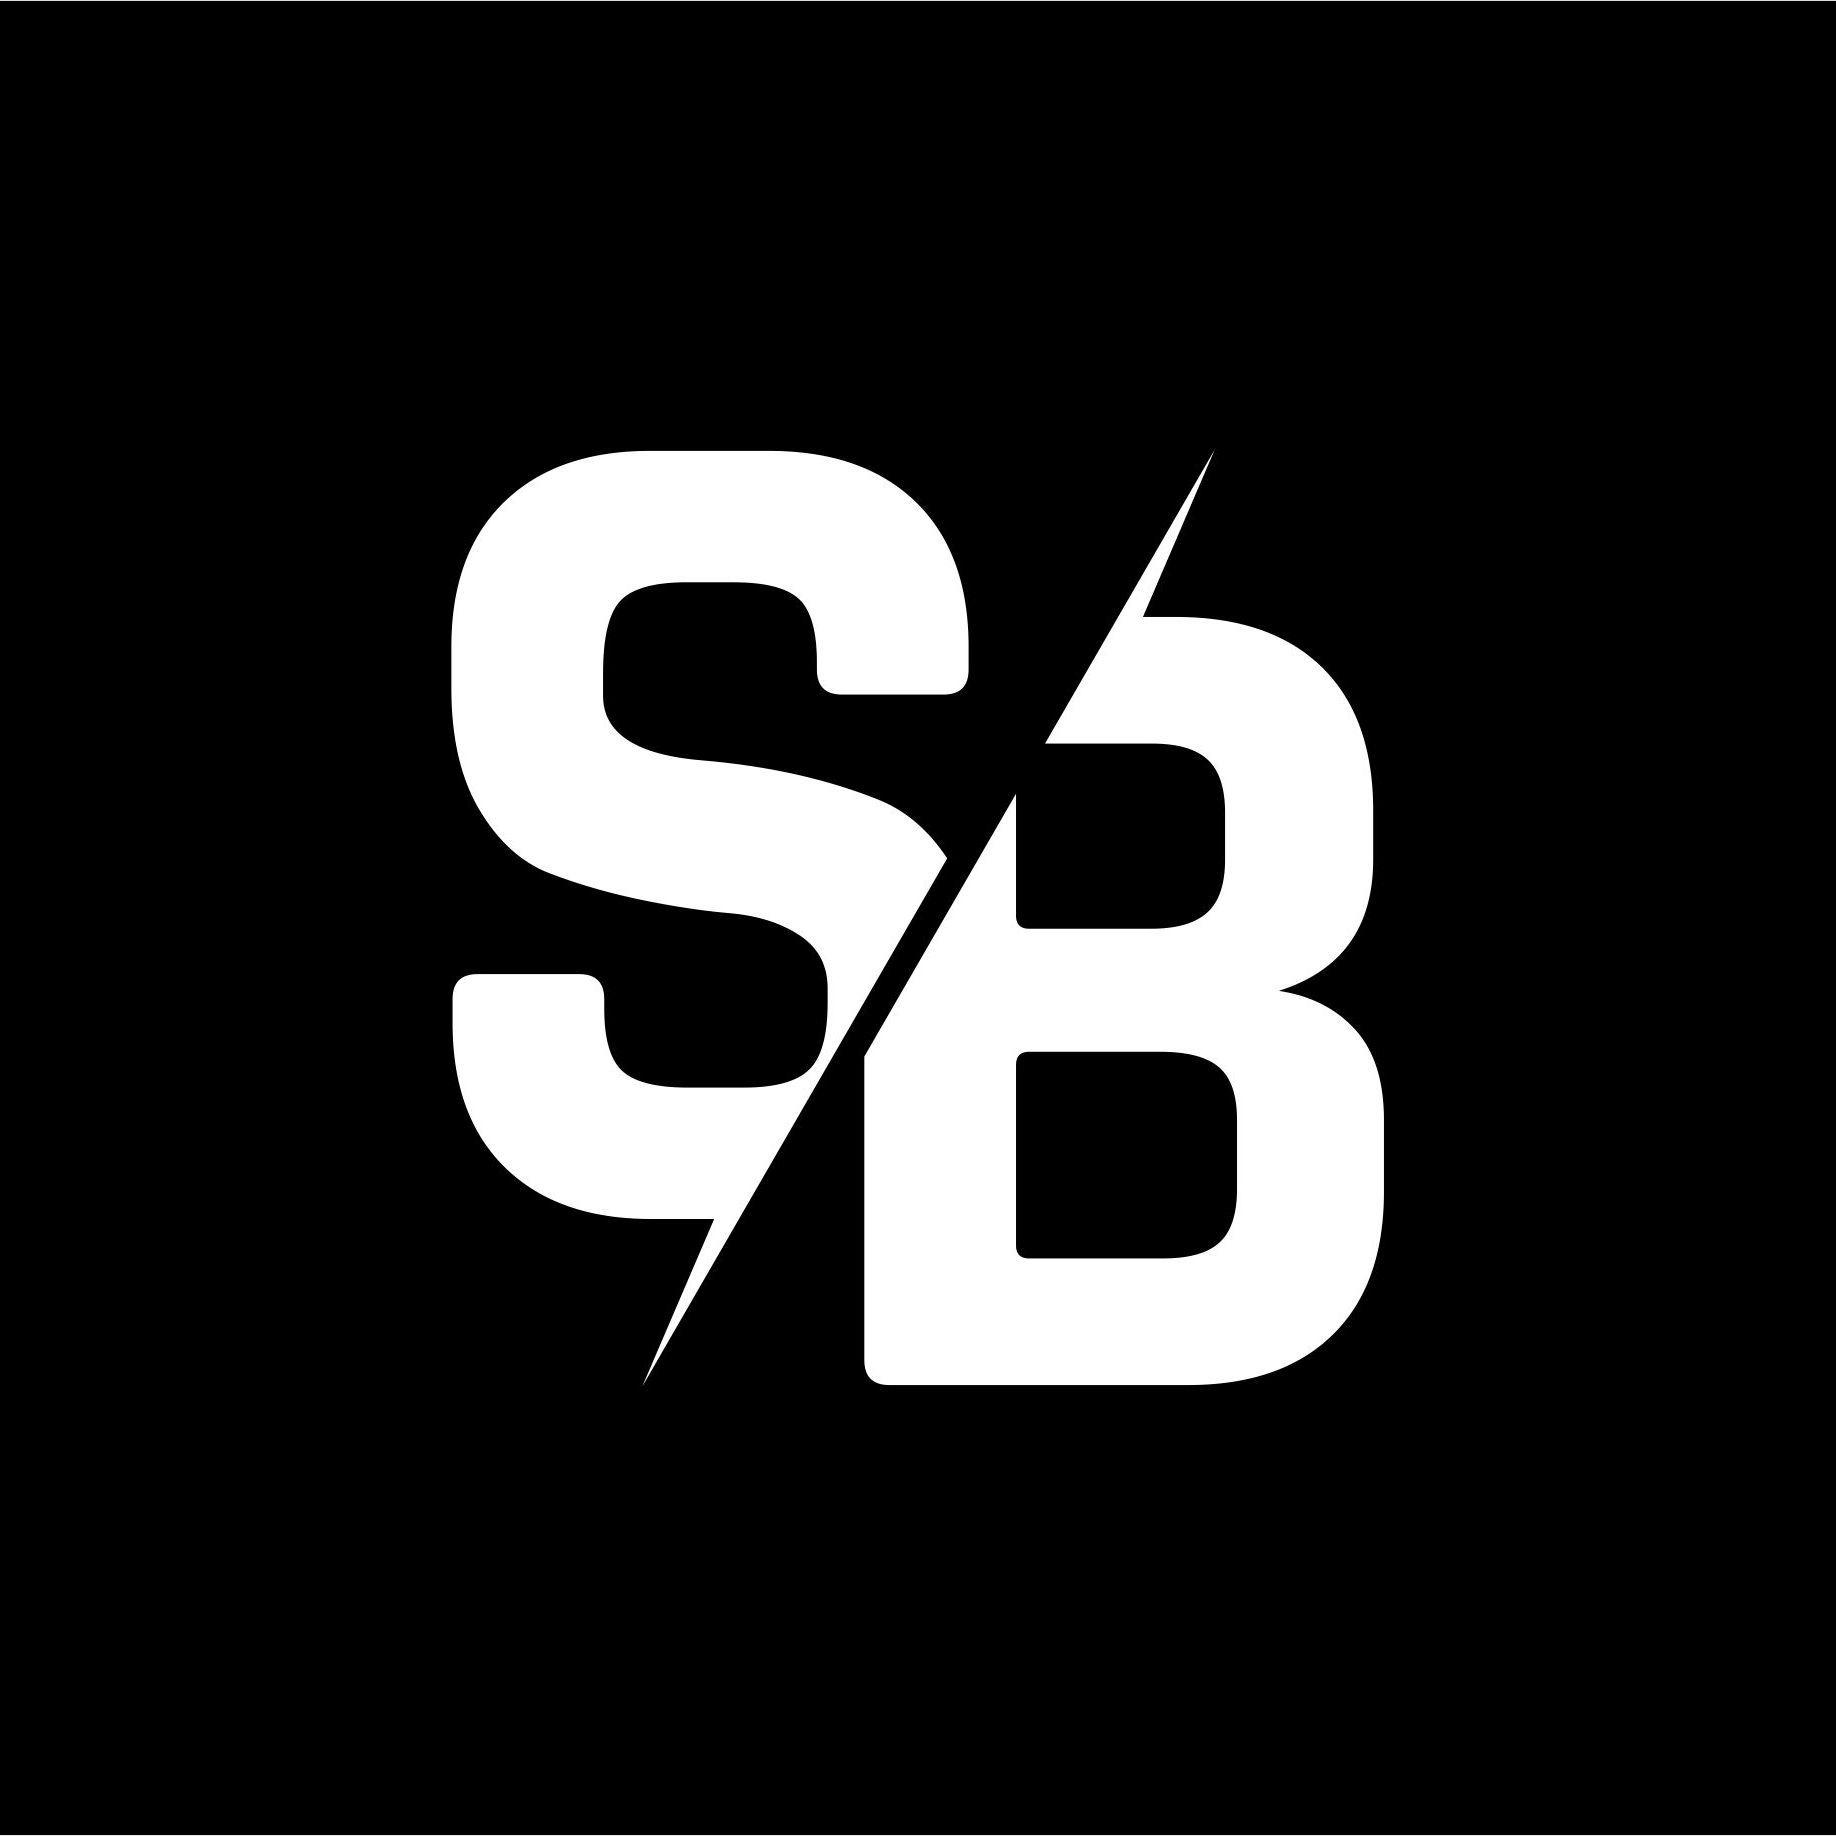 S y com. Логотип СД. Логотип os. Sh логотип. Буква g на черном фоне.